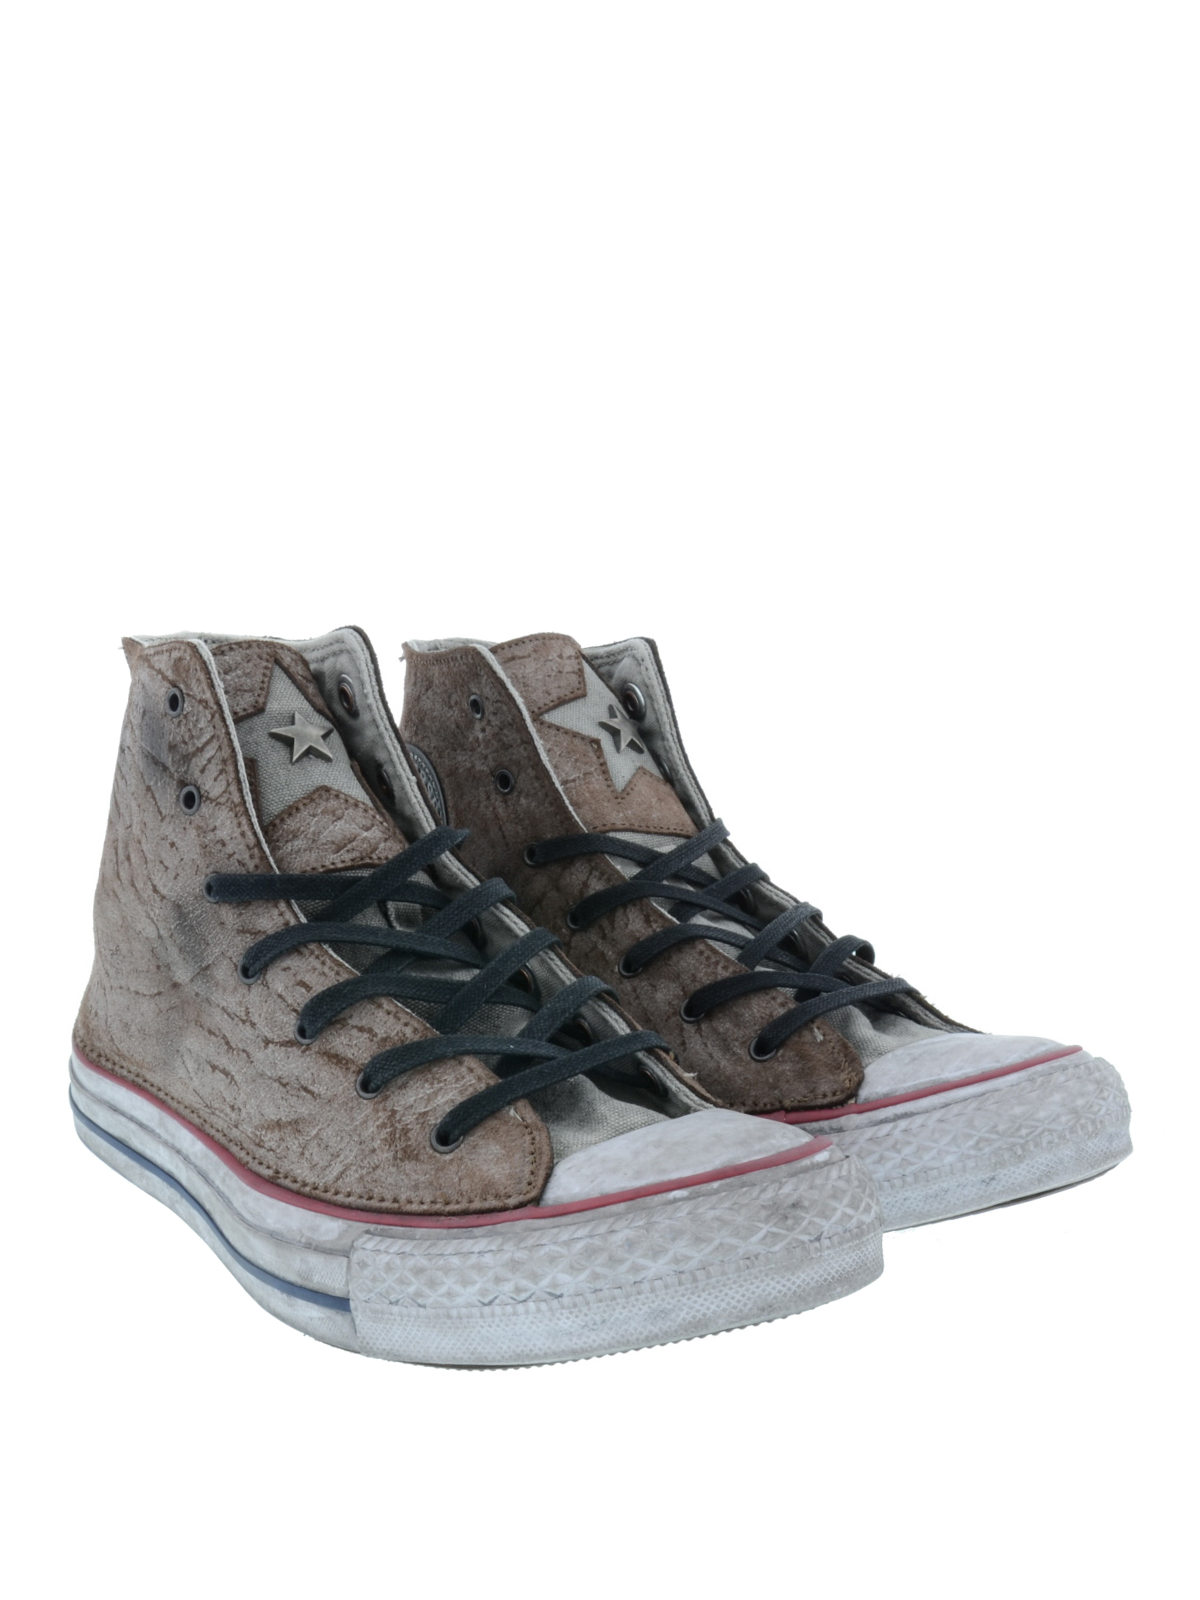 solo Ser amado Audaz Zapatillas Converse Limited Edition - Premium brown star sneakers -  1C15FA07BROWN